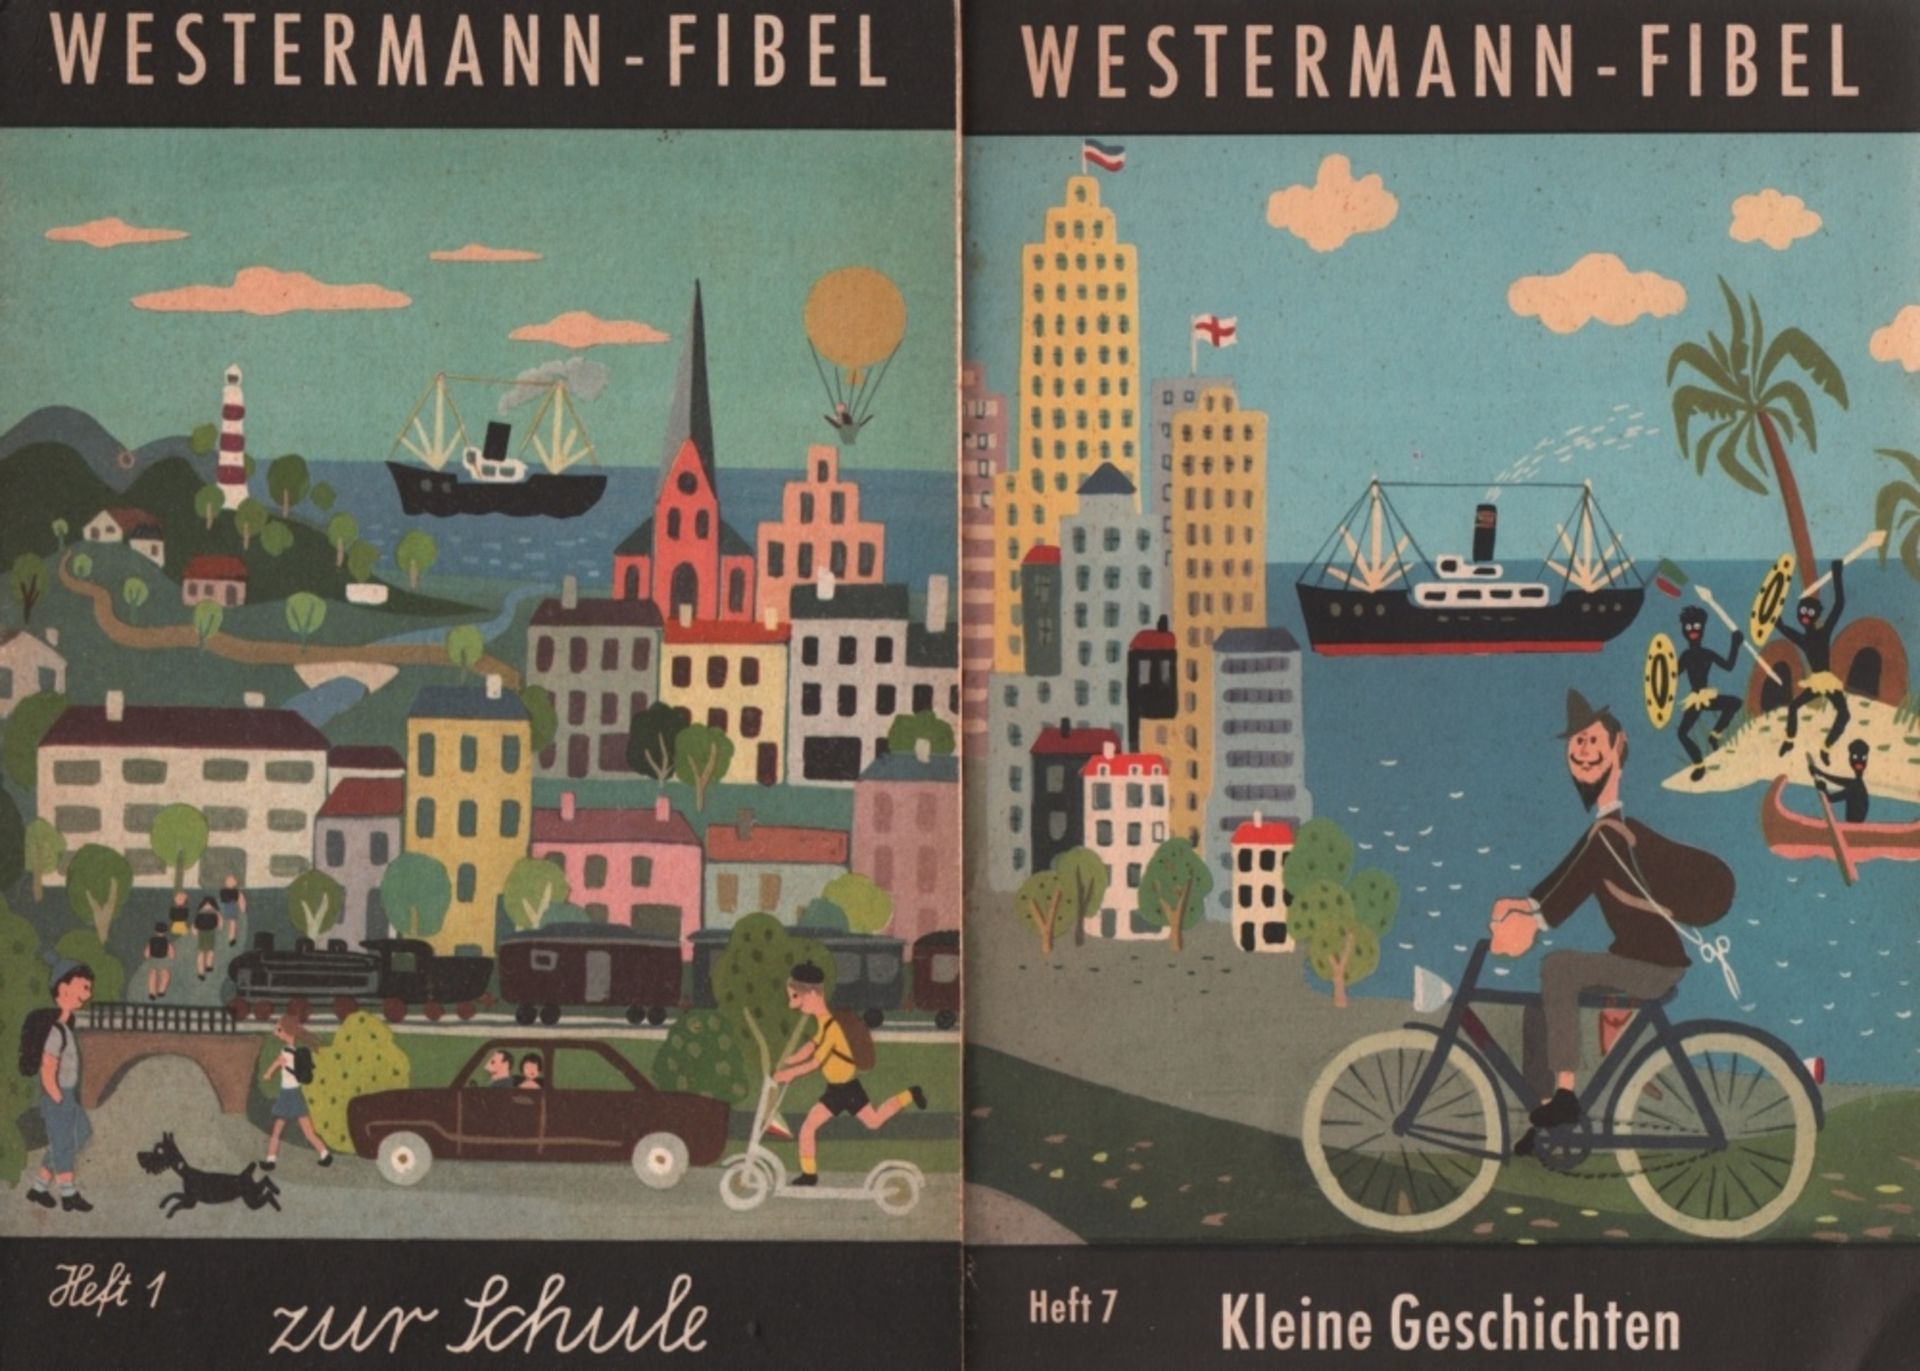 Fibel. Warwel, Kurt u. Kurt Knack. Westermann Fibel 1.- 7. Heft. Braunschweig, Westermann, ca. 1960.